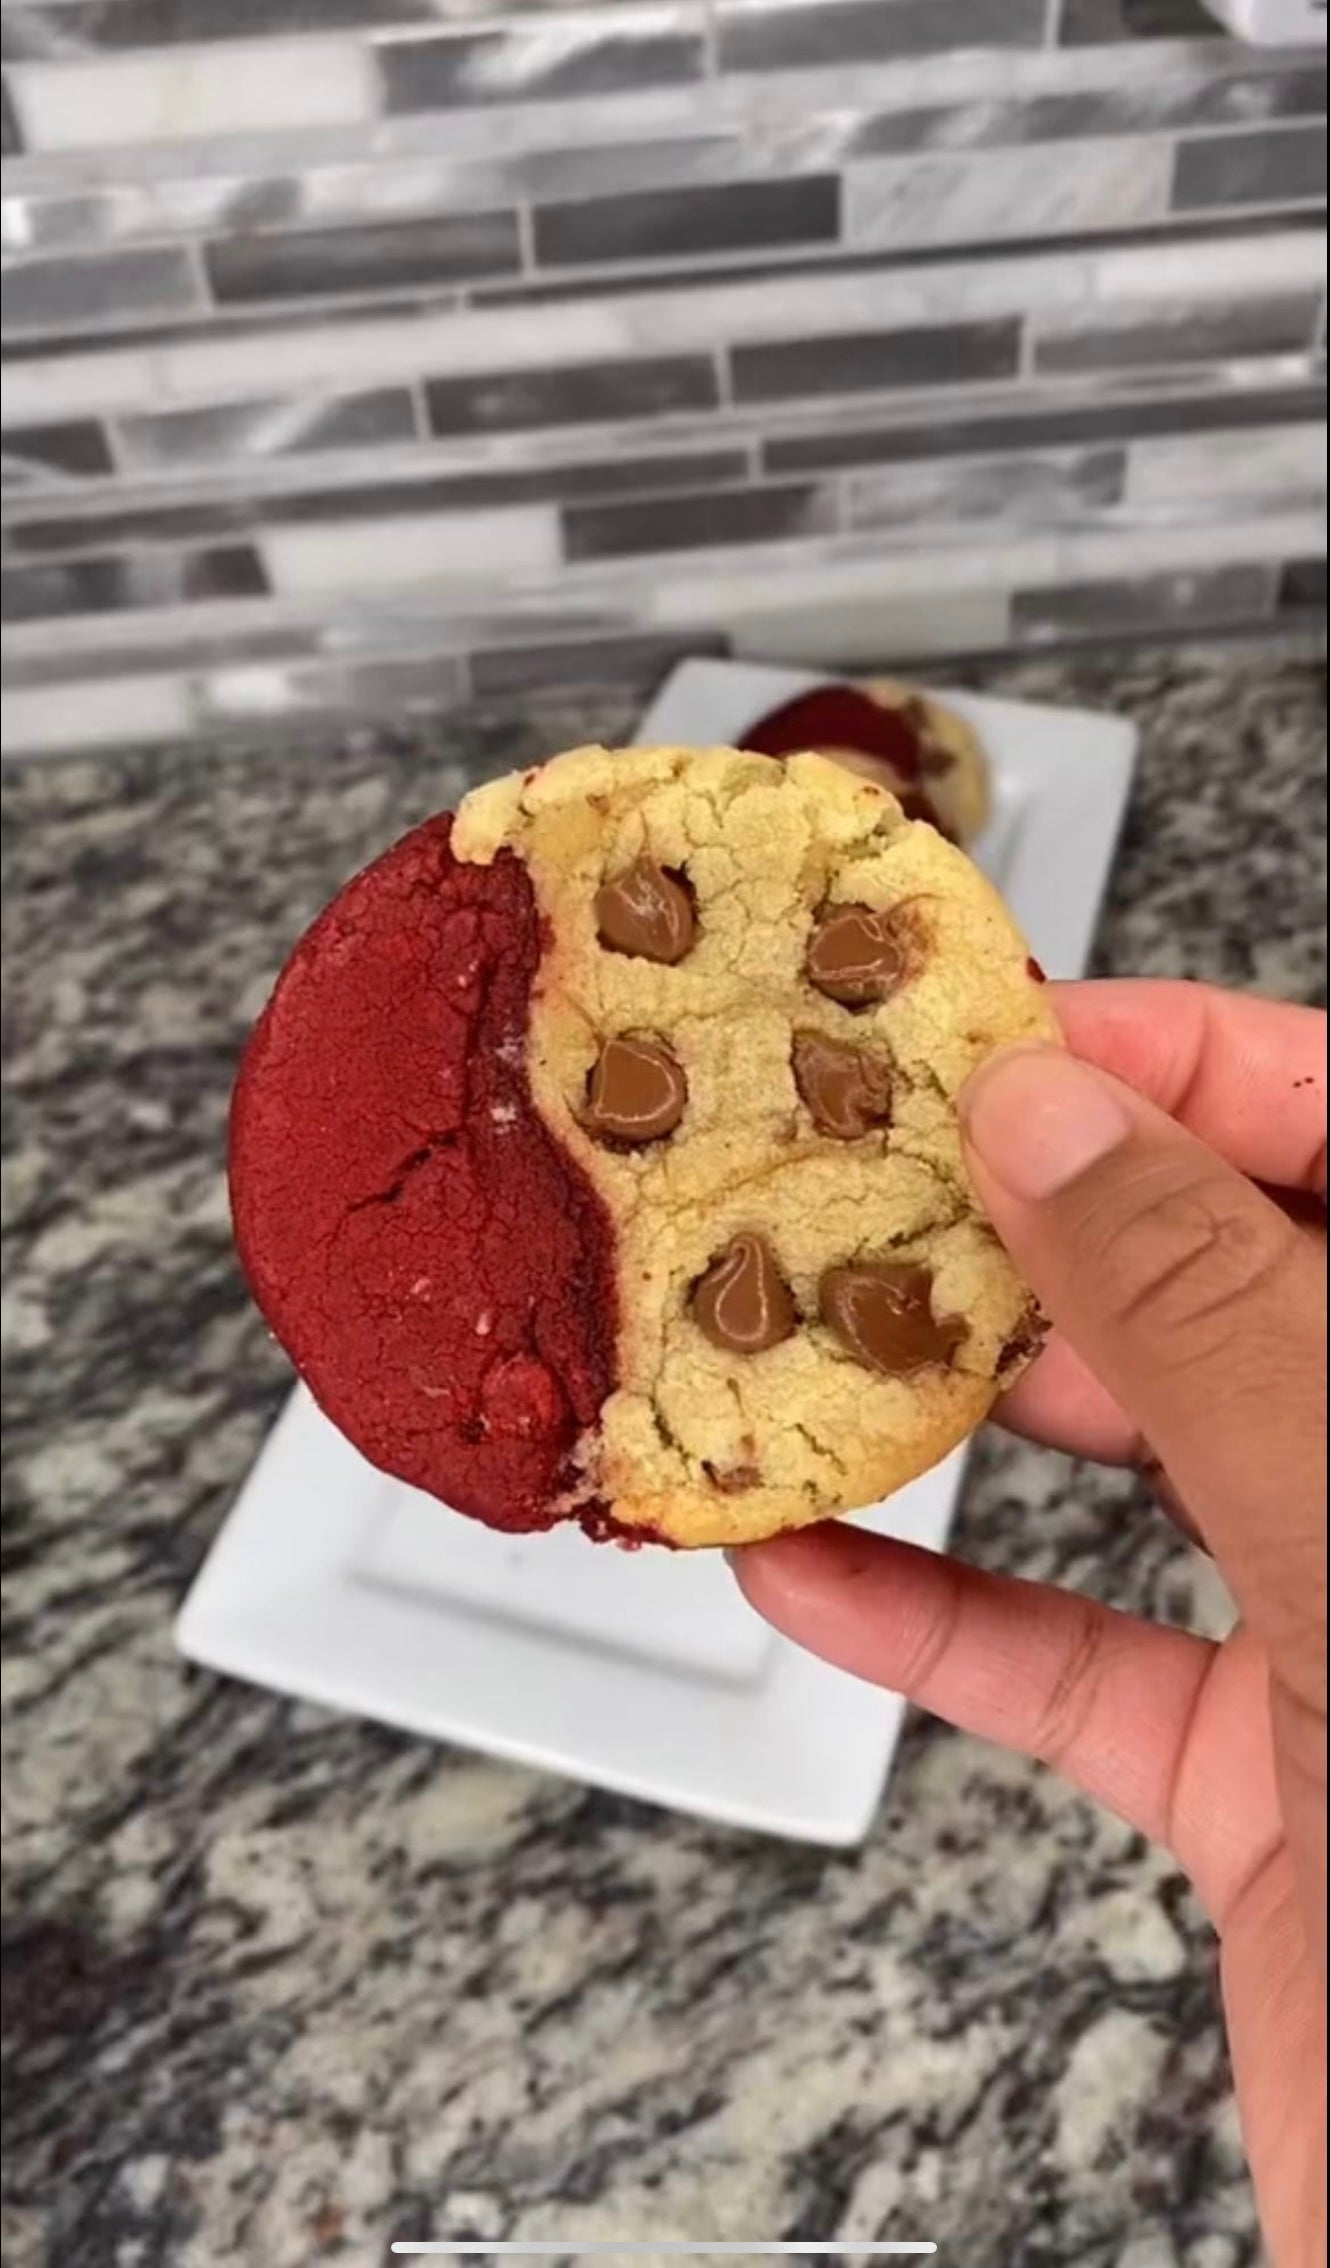 Red velvet chocolate chip cookies